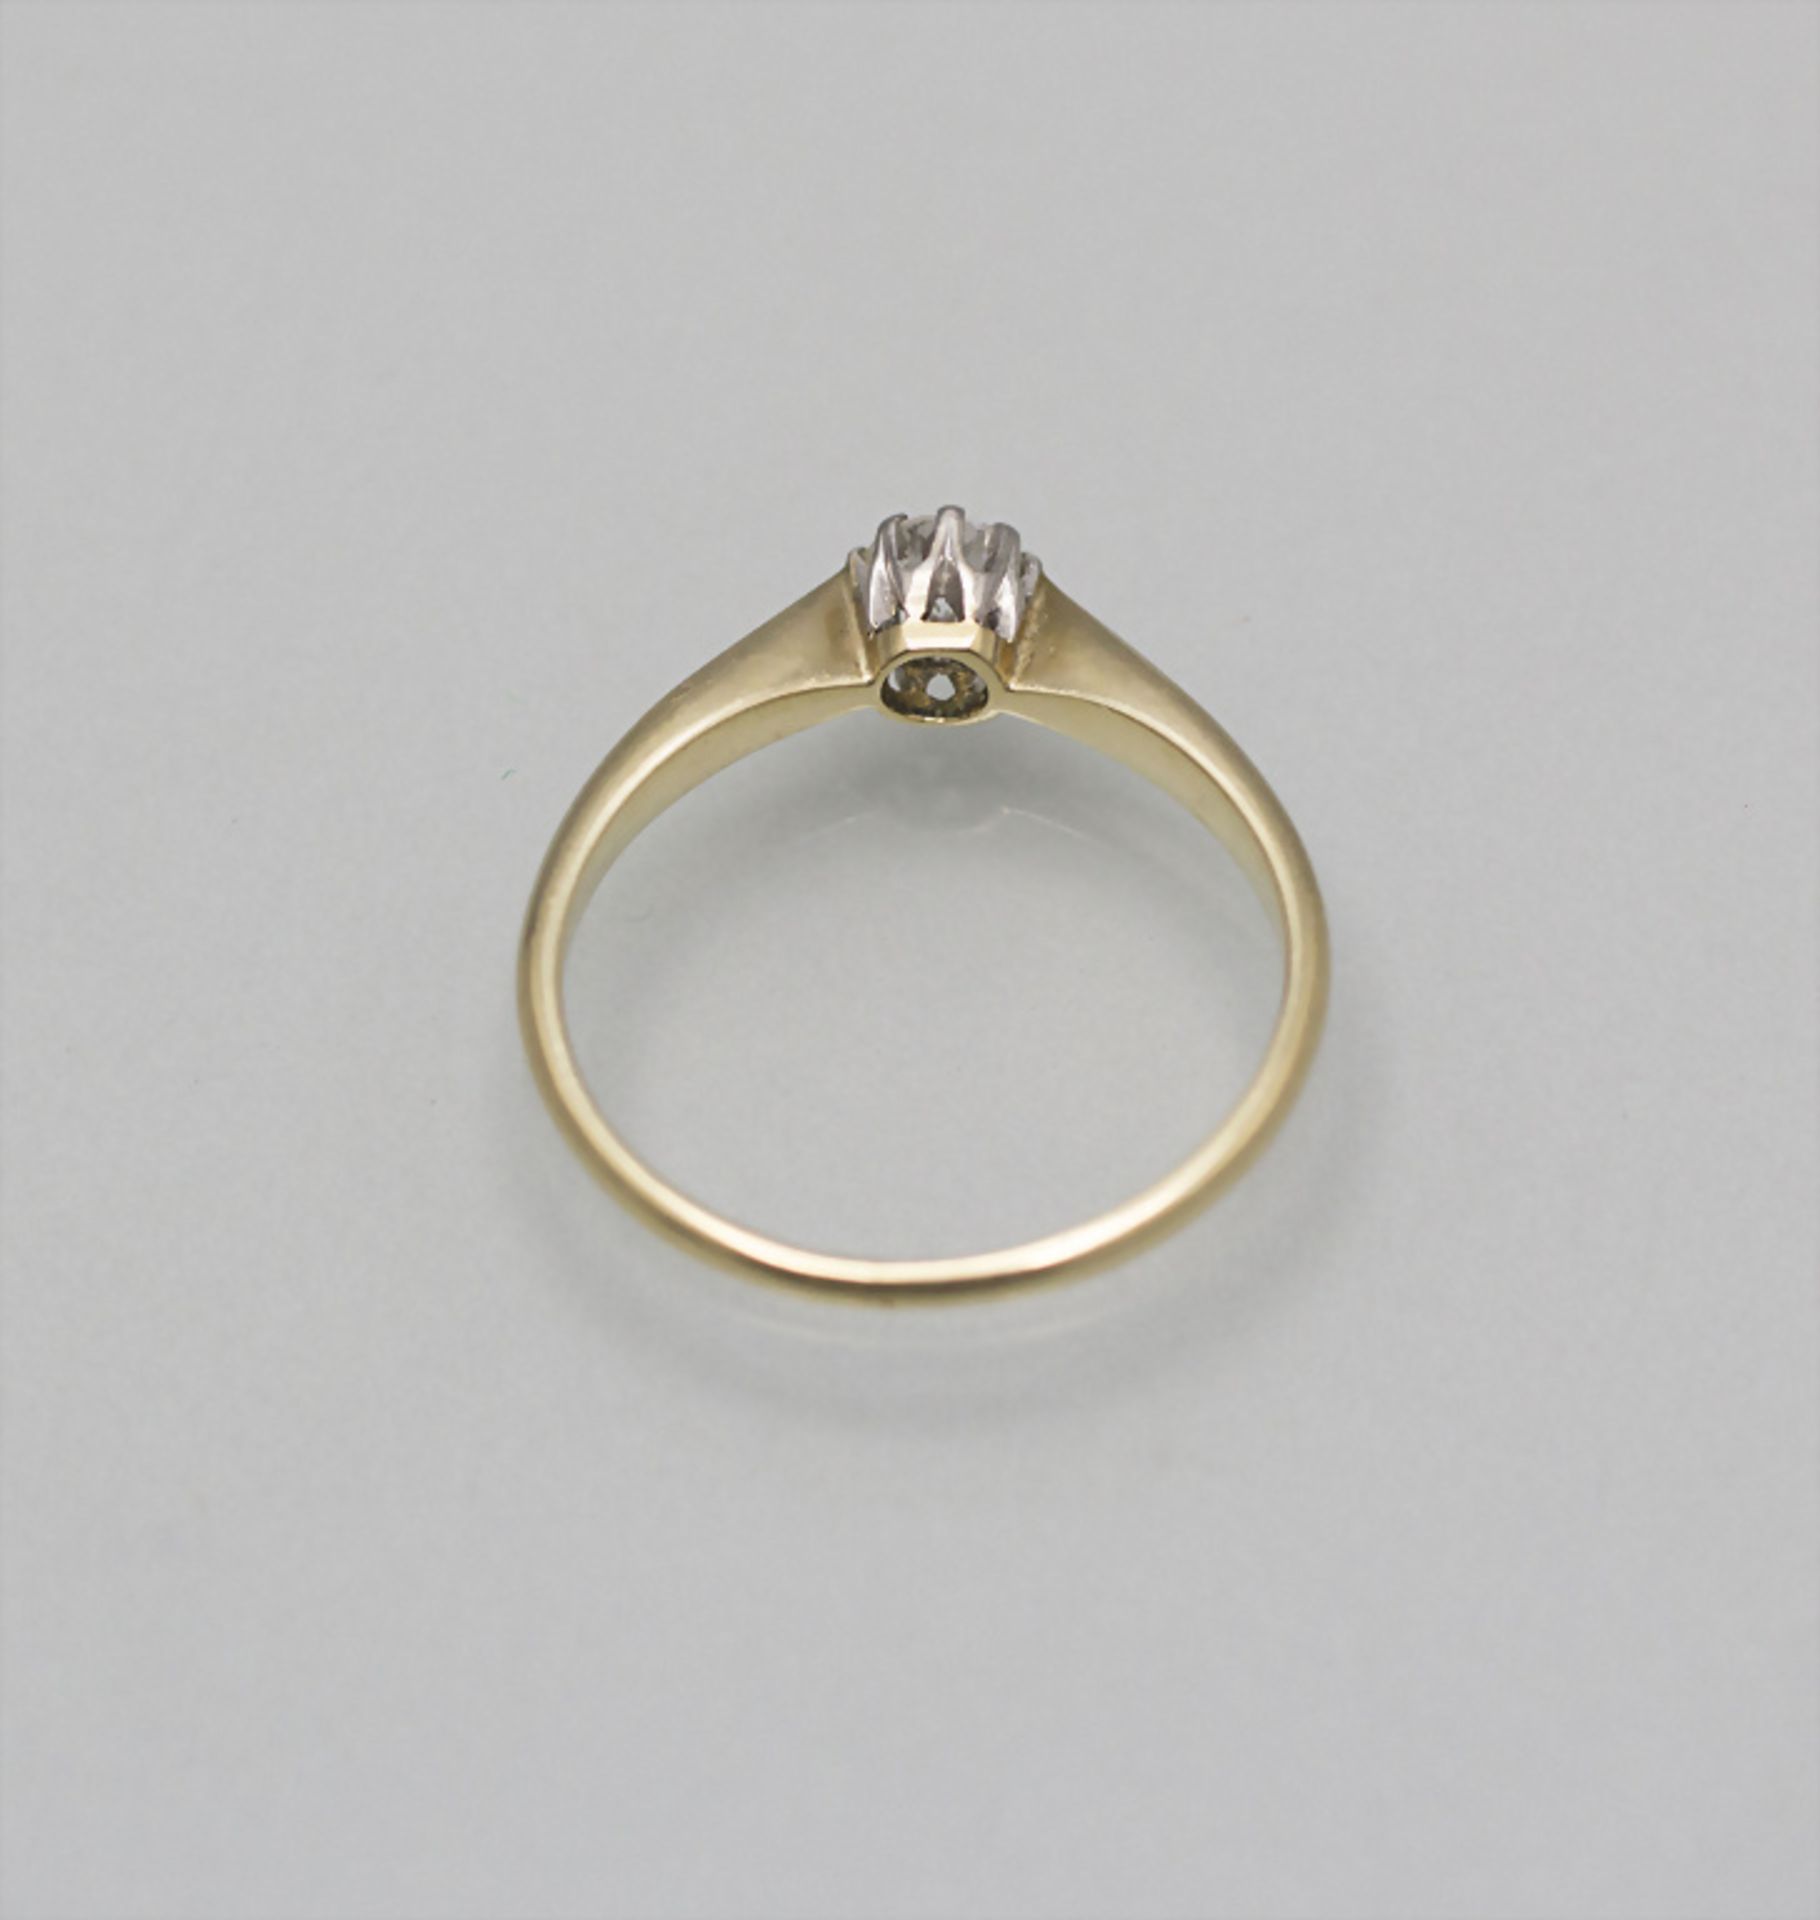 Damenring mit Brillant / A ladies 14 ct gold ring with diamond - Bild 2 aus 2